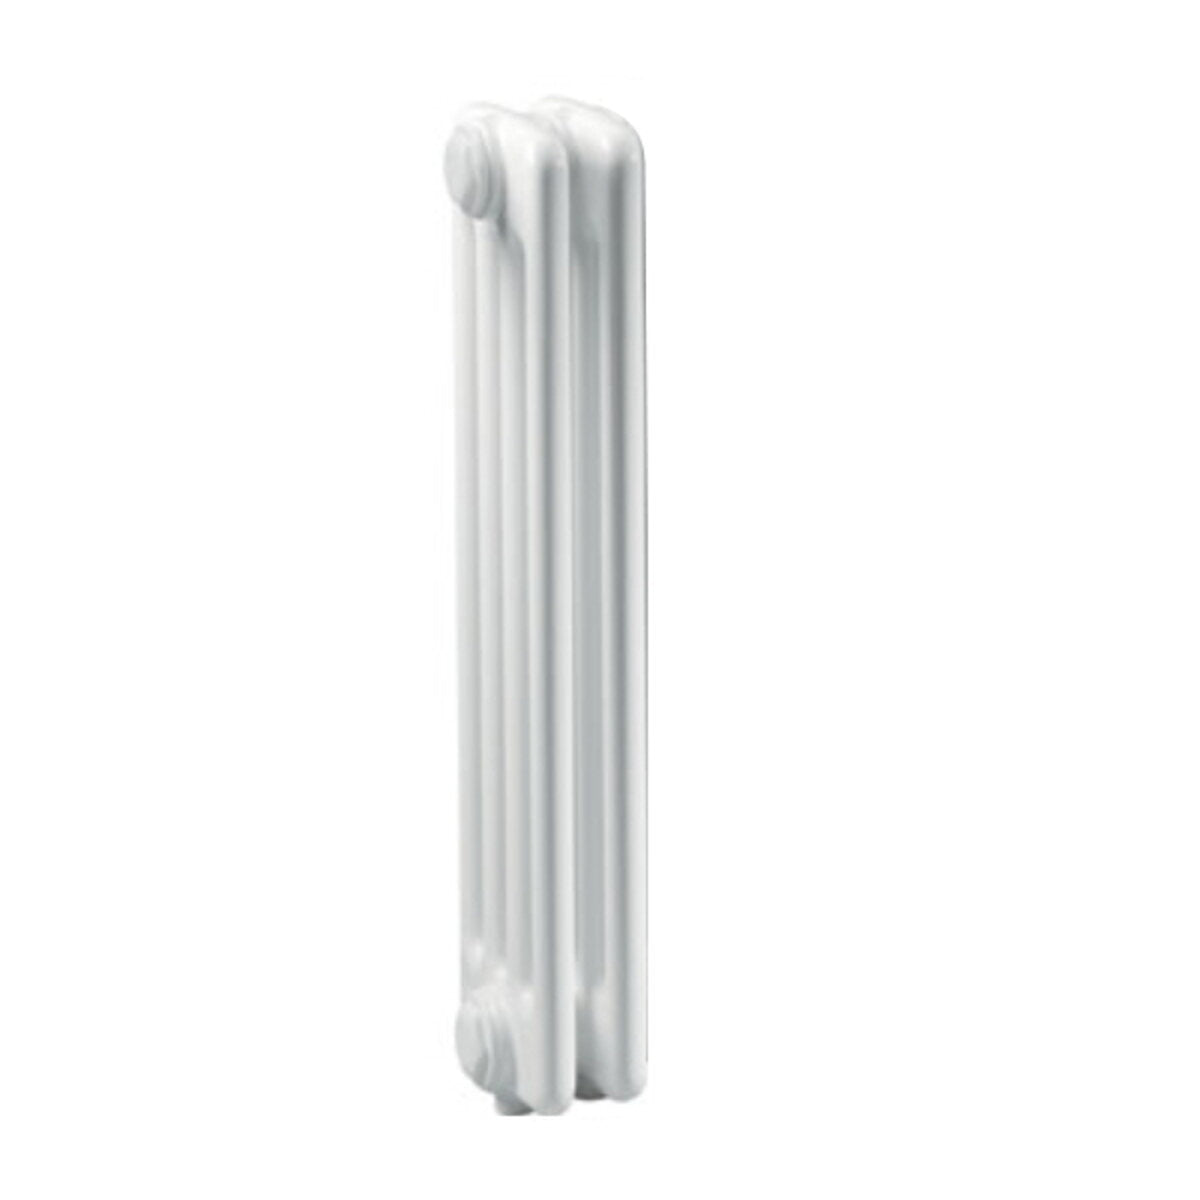 Ercos Comby steel column radiator 2 elements 3 columns center distance 1735 mm